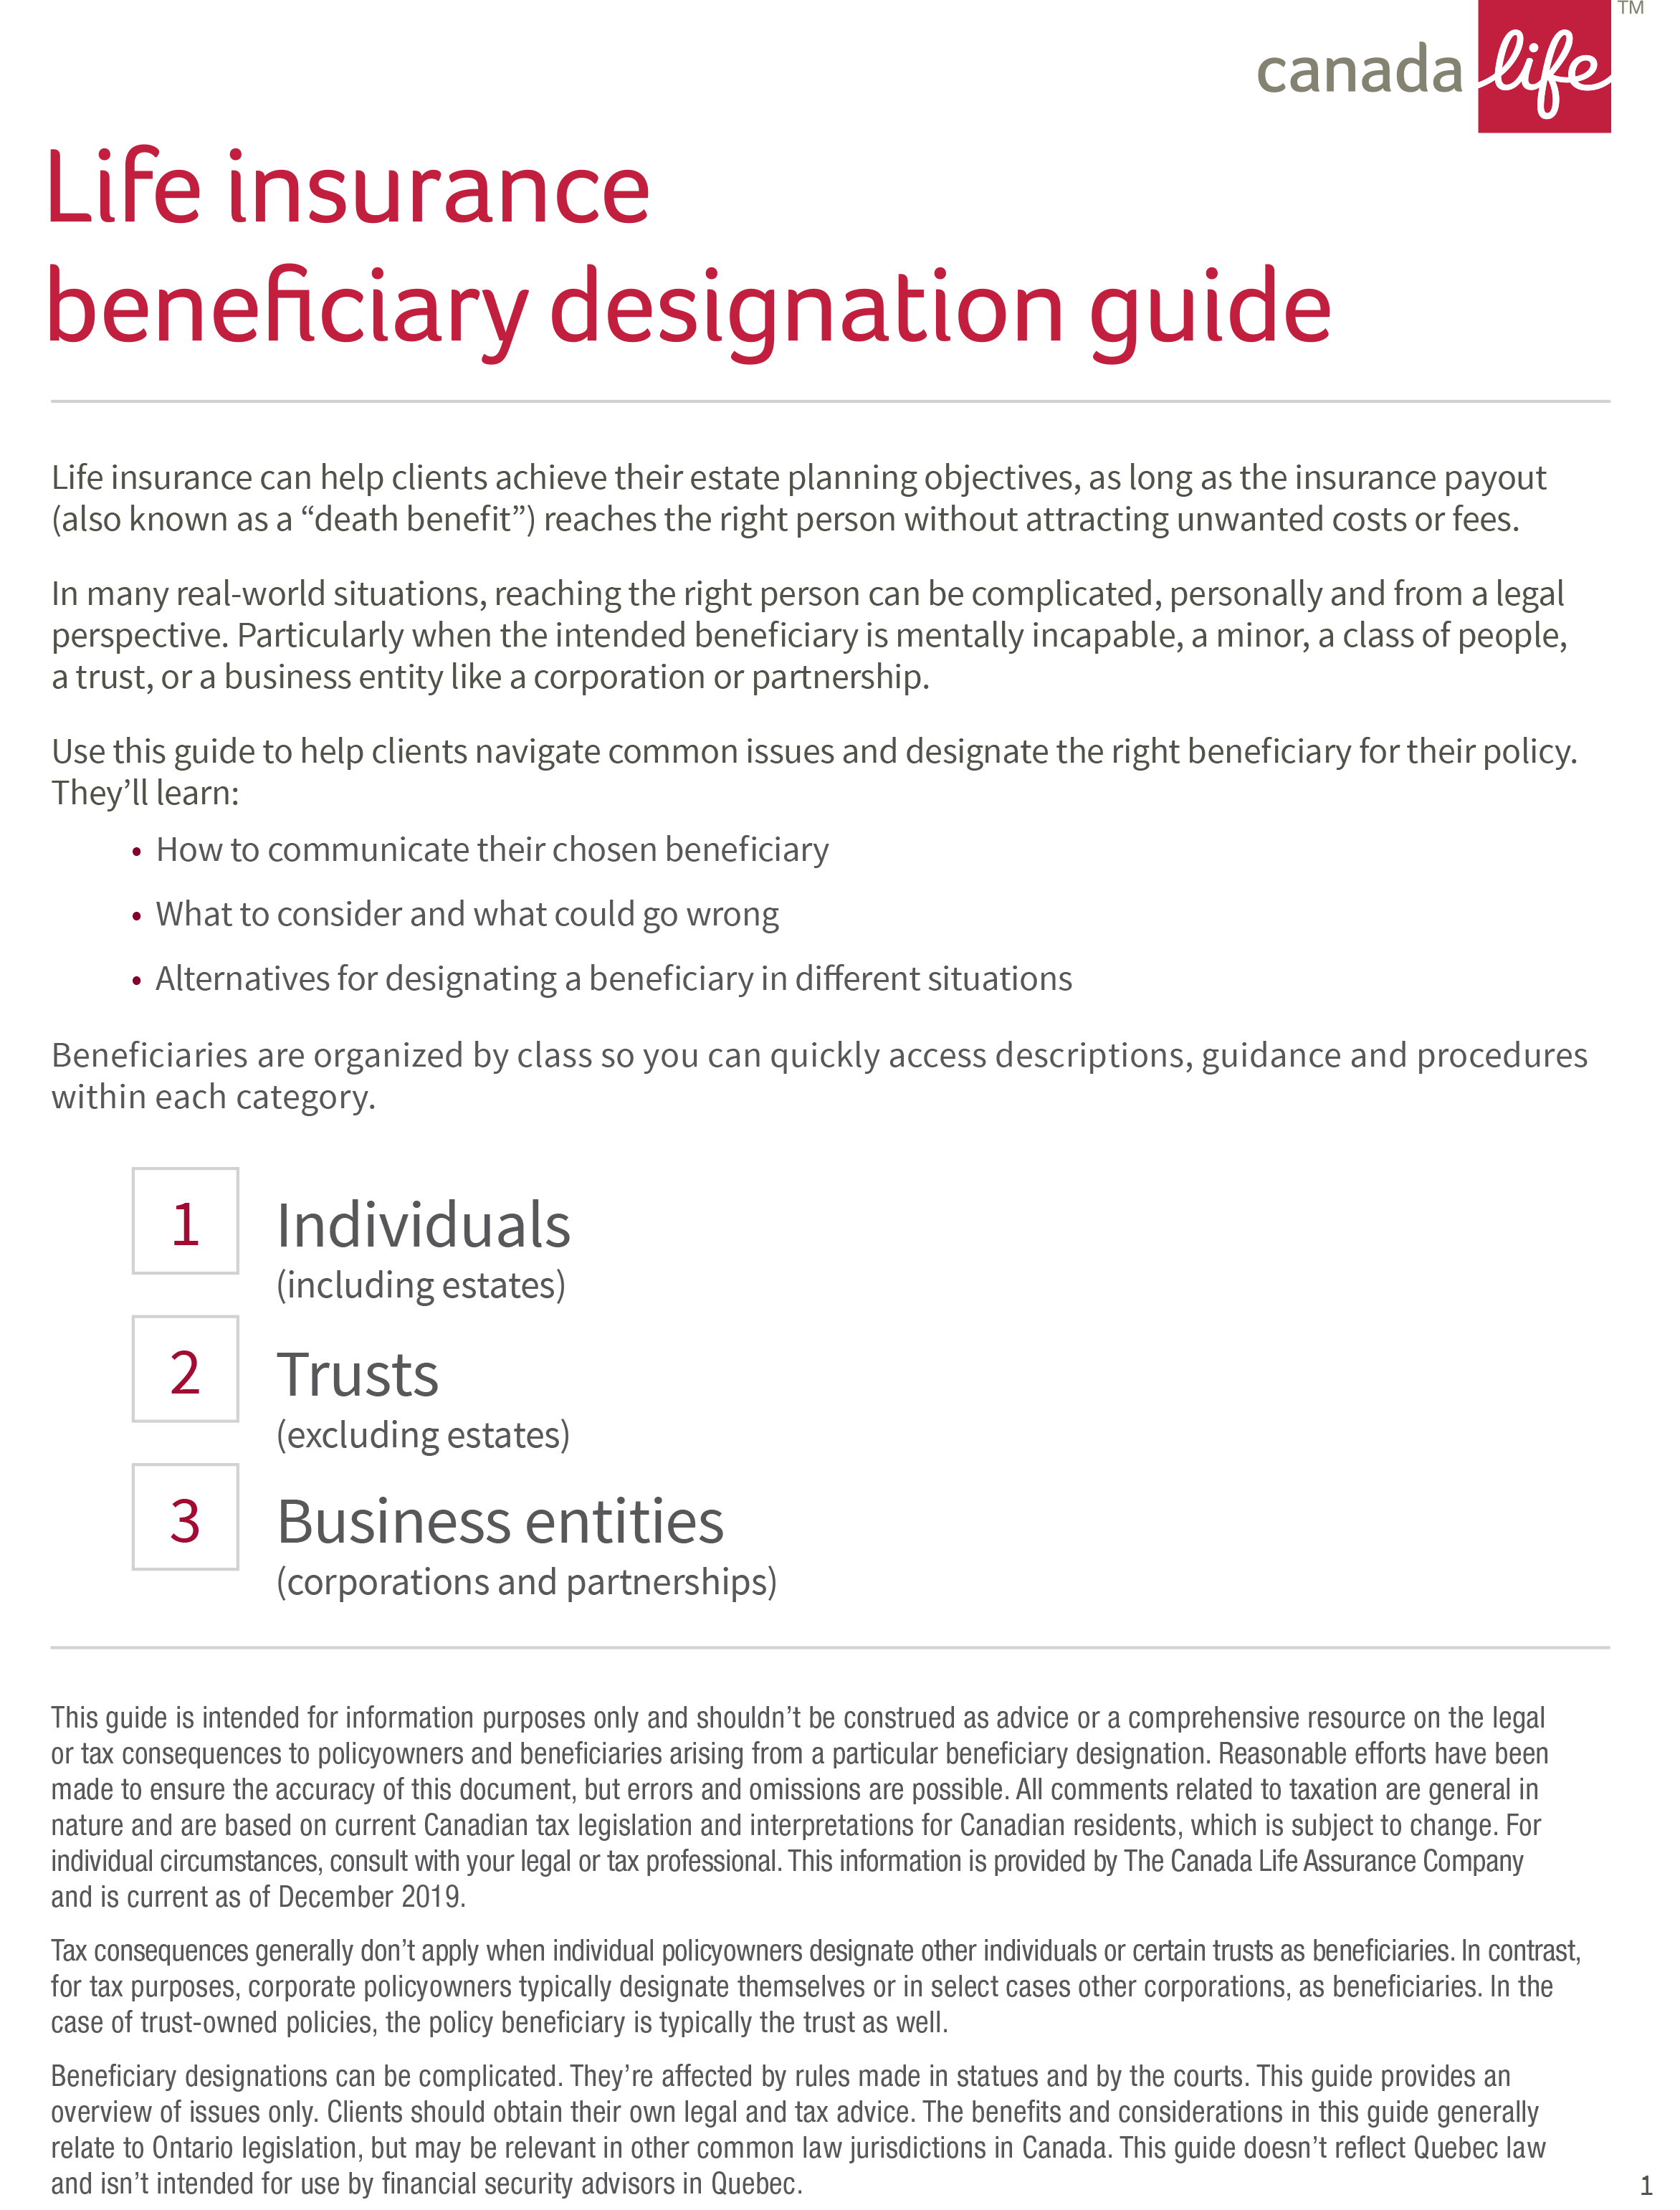 Life insurance beneficiary designation guide image